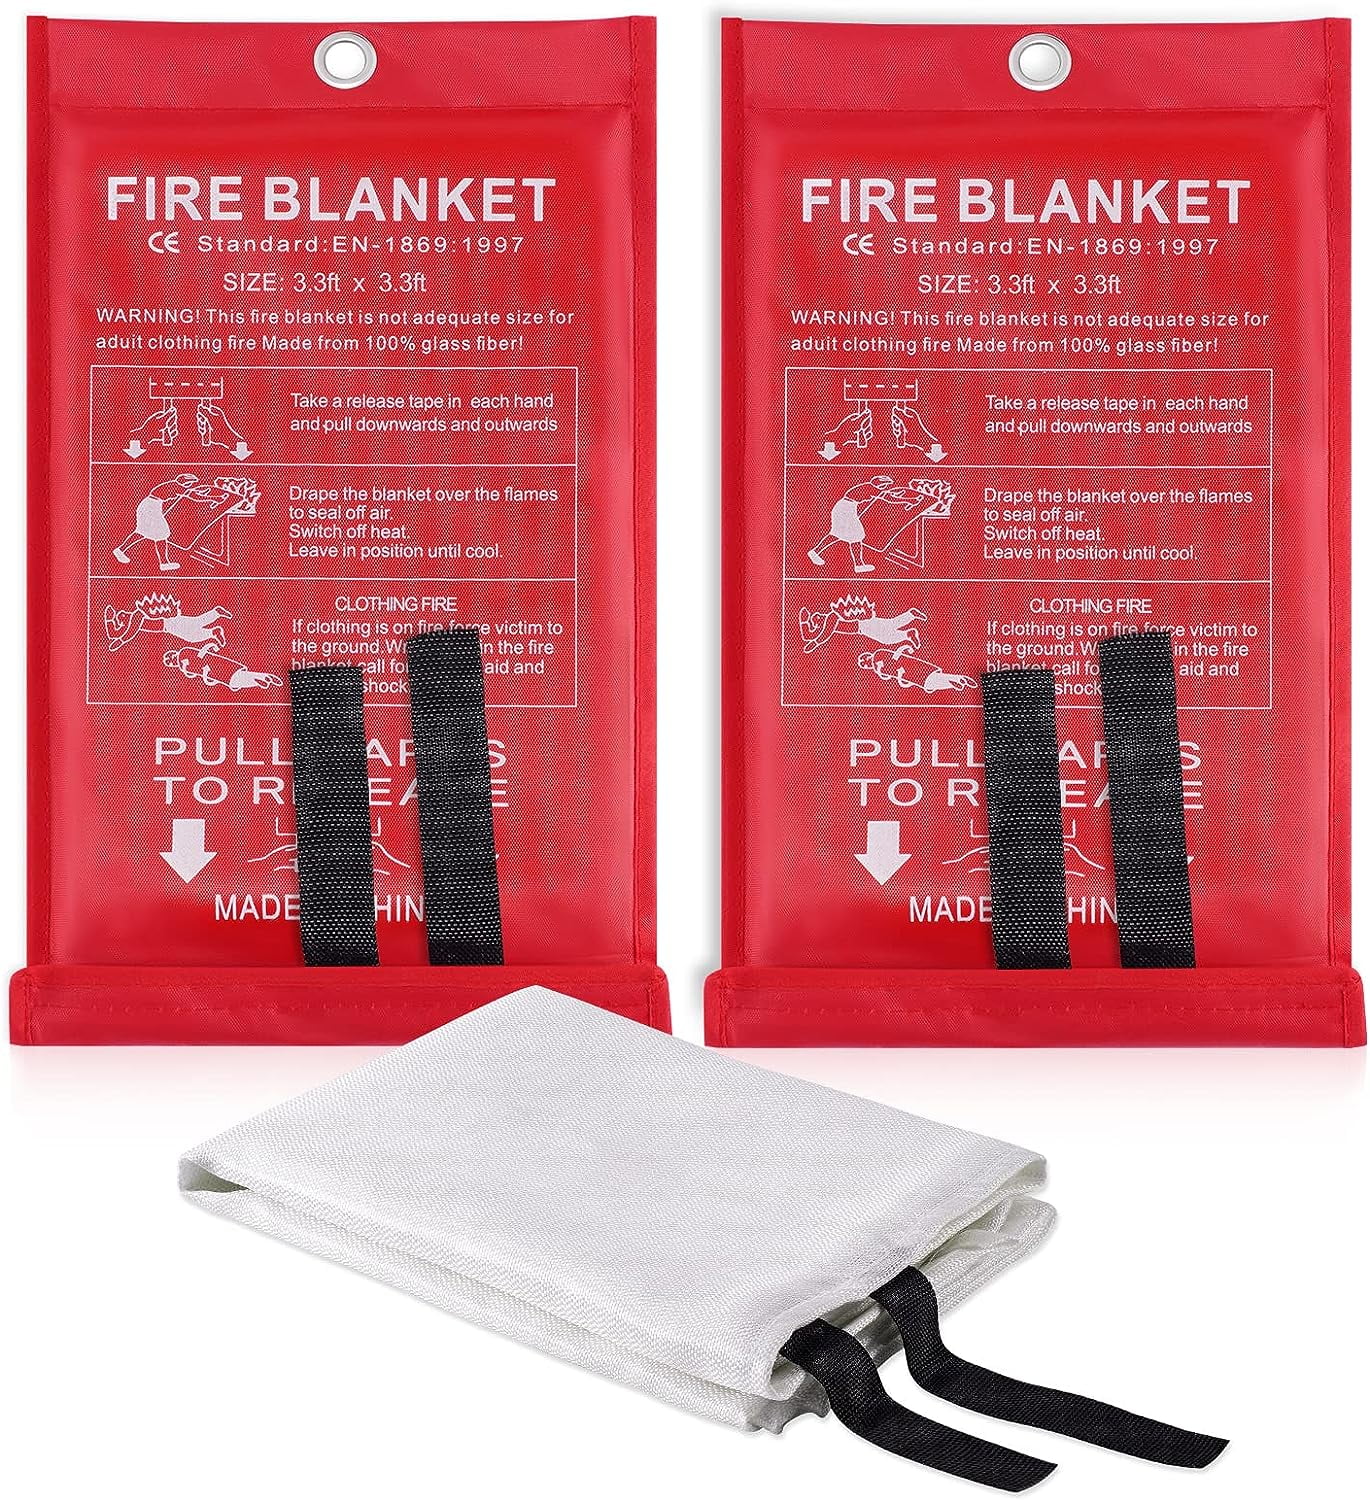 Fire Blankets Emergency Kitchen Home Mondoshop Retardant Blanket Fireproof Camping Grill Car Office Warehouse School Picnic Fireplace 47eeafb6 47d5 49ab B009 17c939a77841.ebffb0d6650abdbc047dc36c8a520aa0 